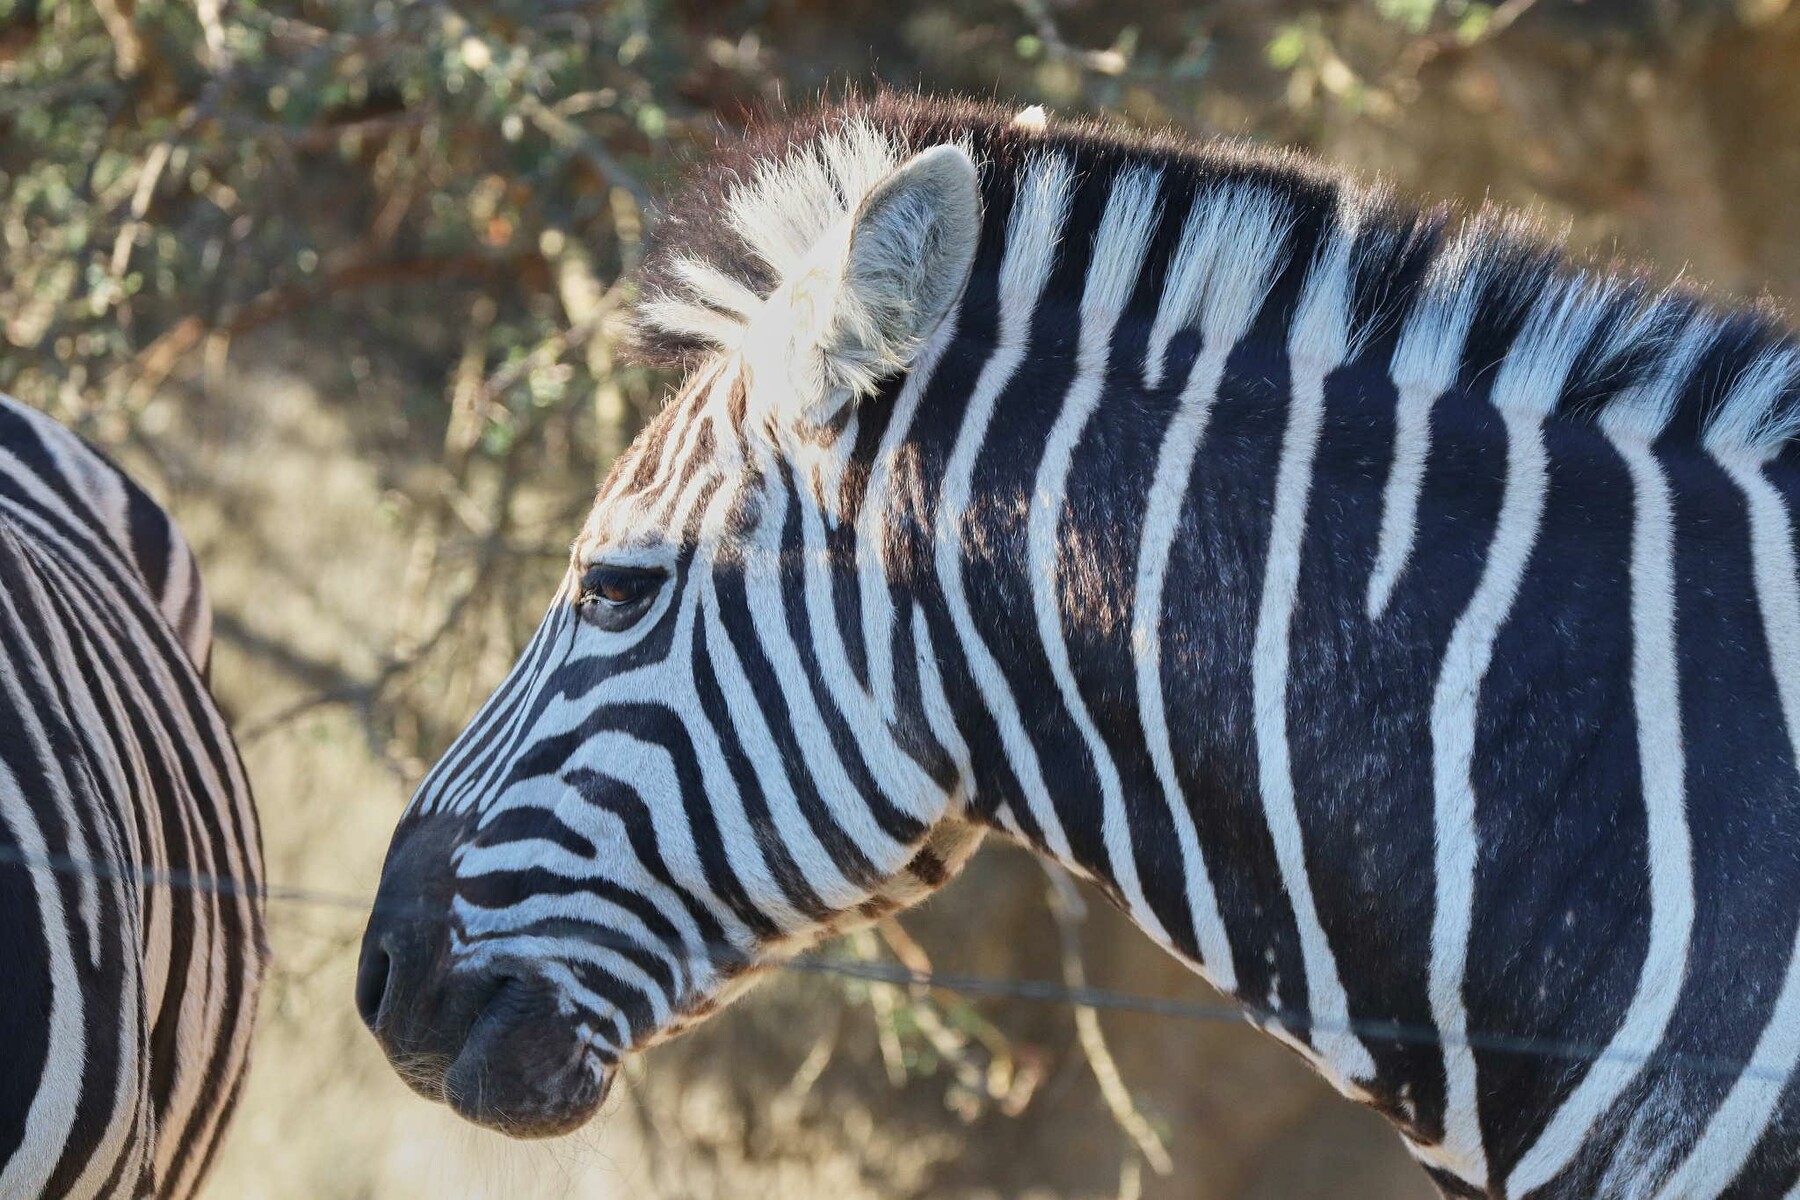 ArtStation - 162 photos of Zebras | Resources